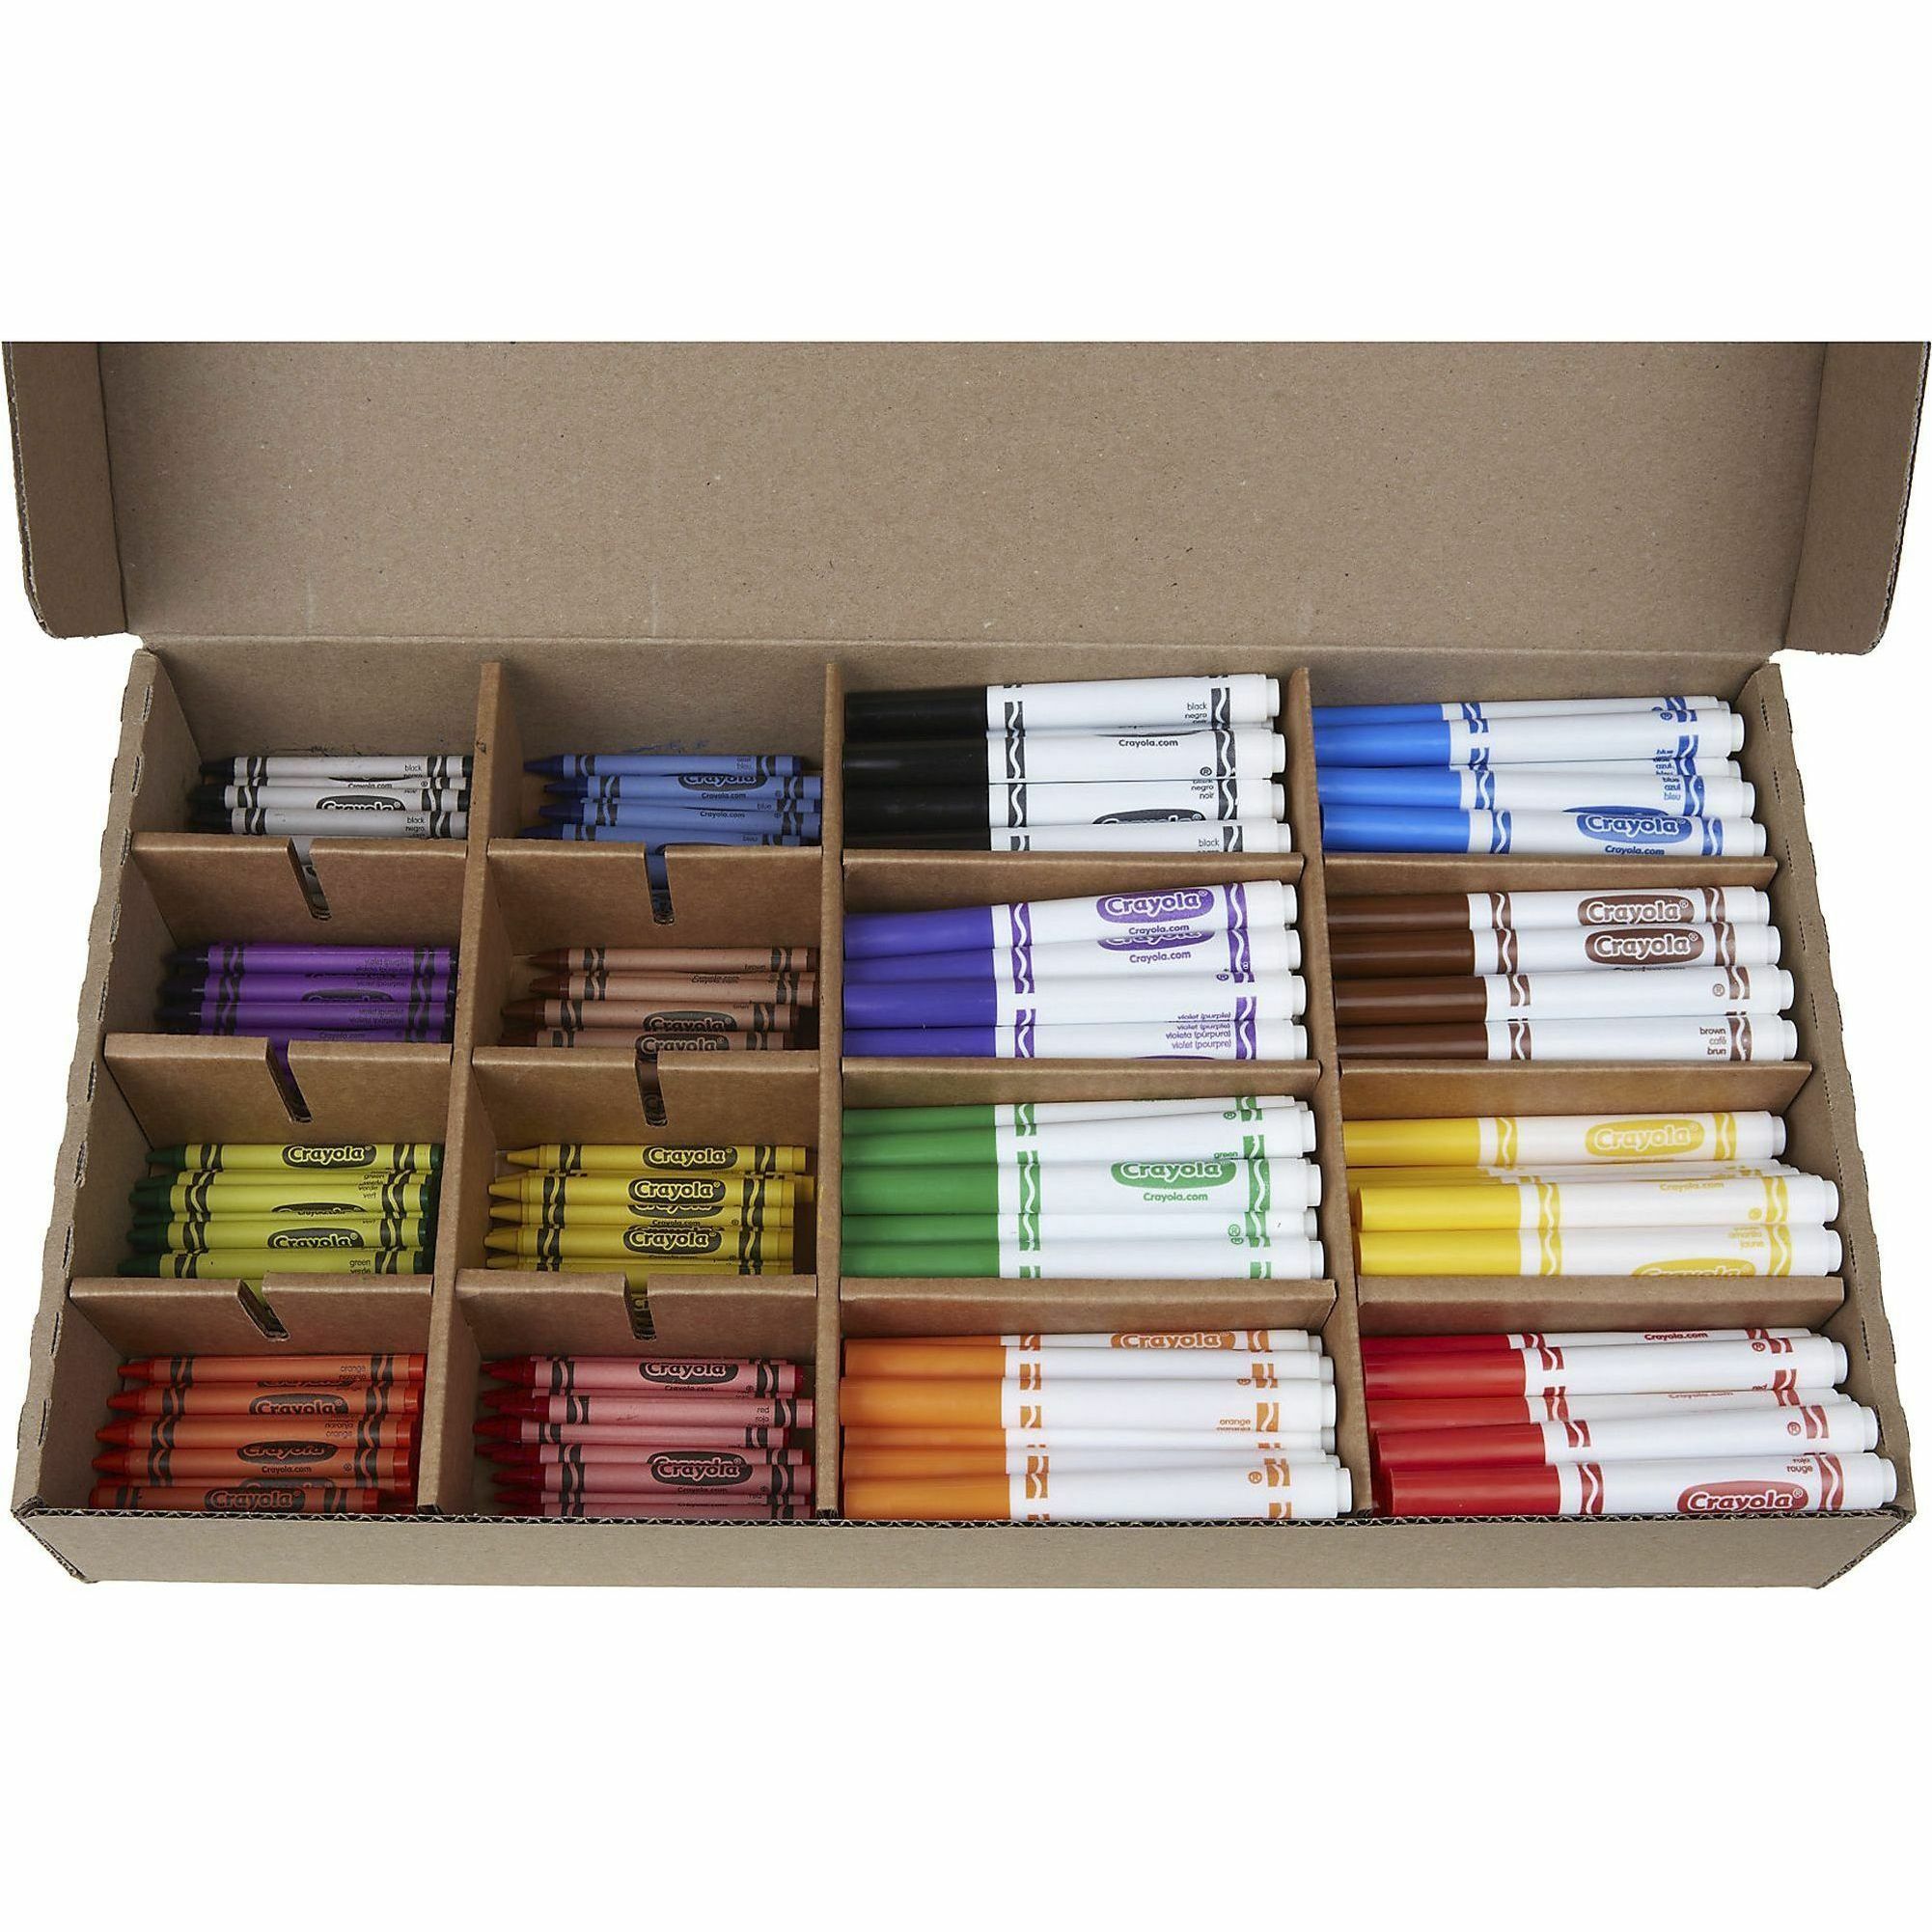 8 Markers/Set CYO988628 Crayola Dry Erase Markers Chise